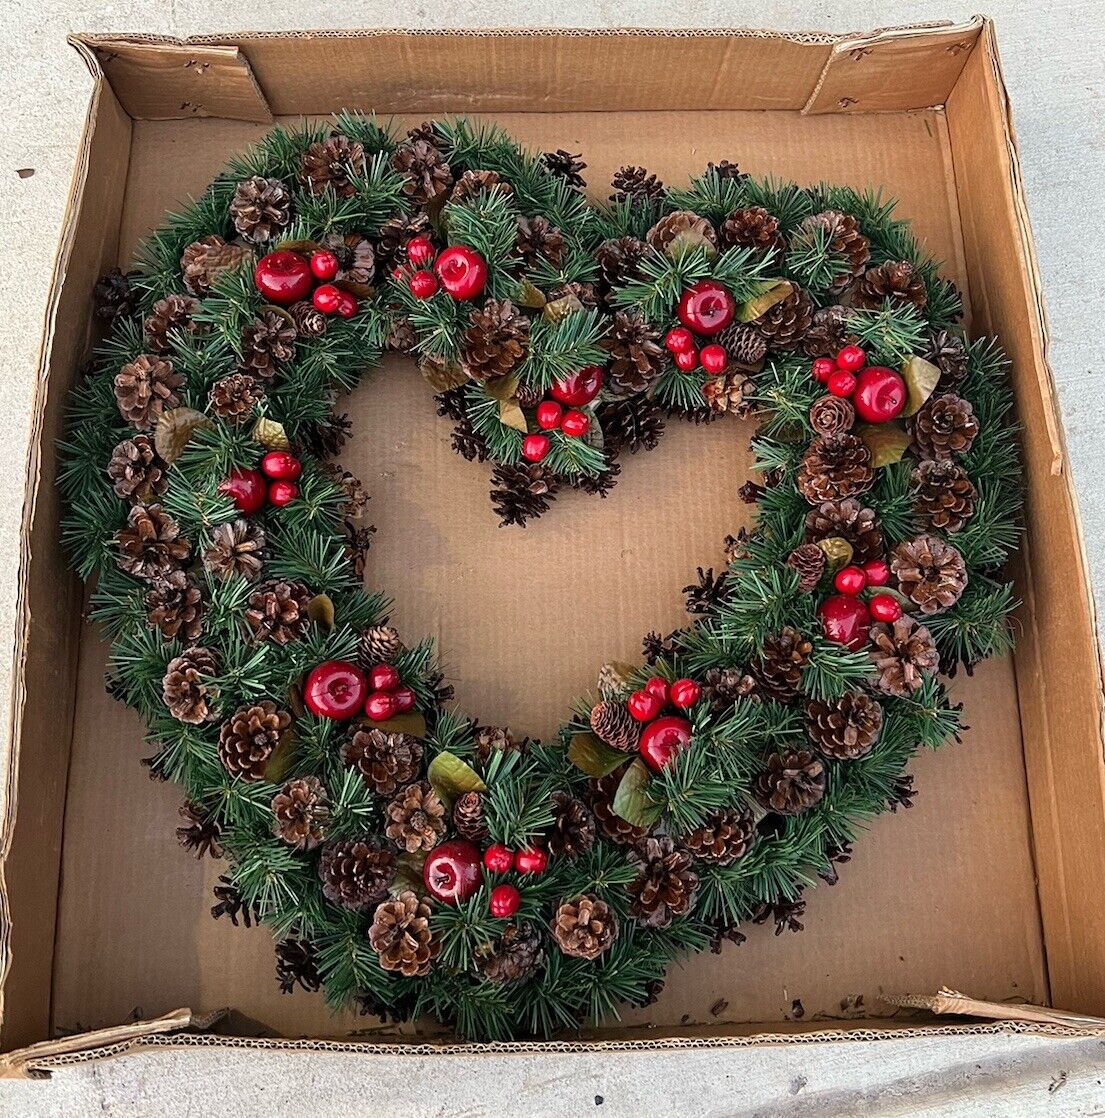 VTG 1989 House Of Lloyds Christmas Wreath Around The World HEART Acorns Apples